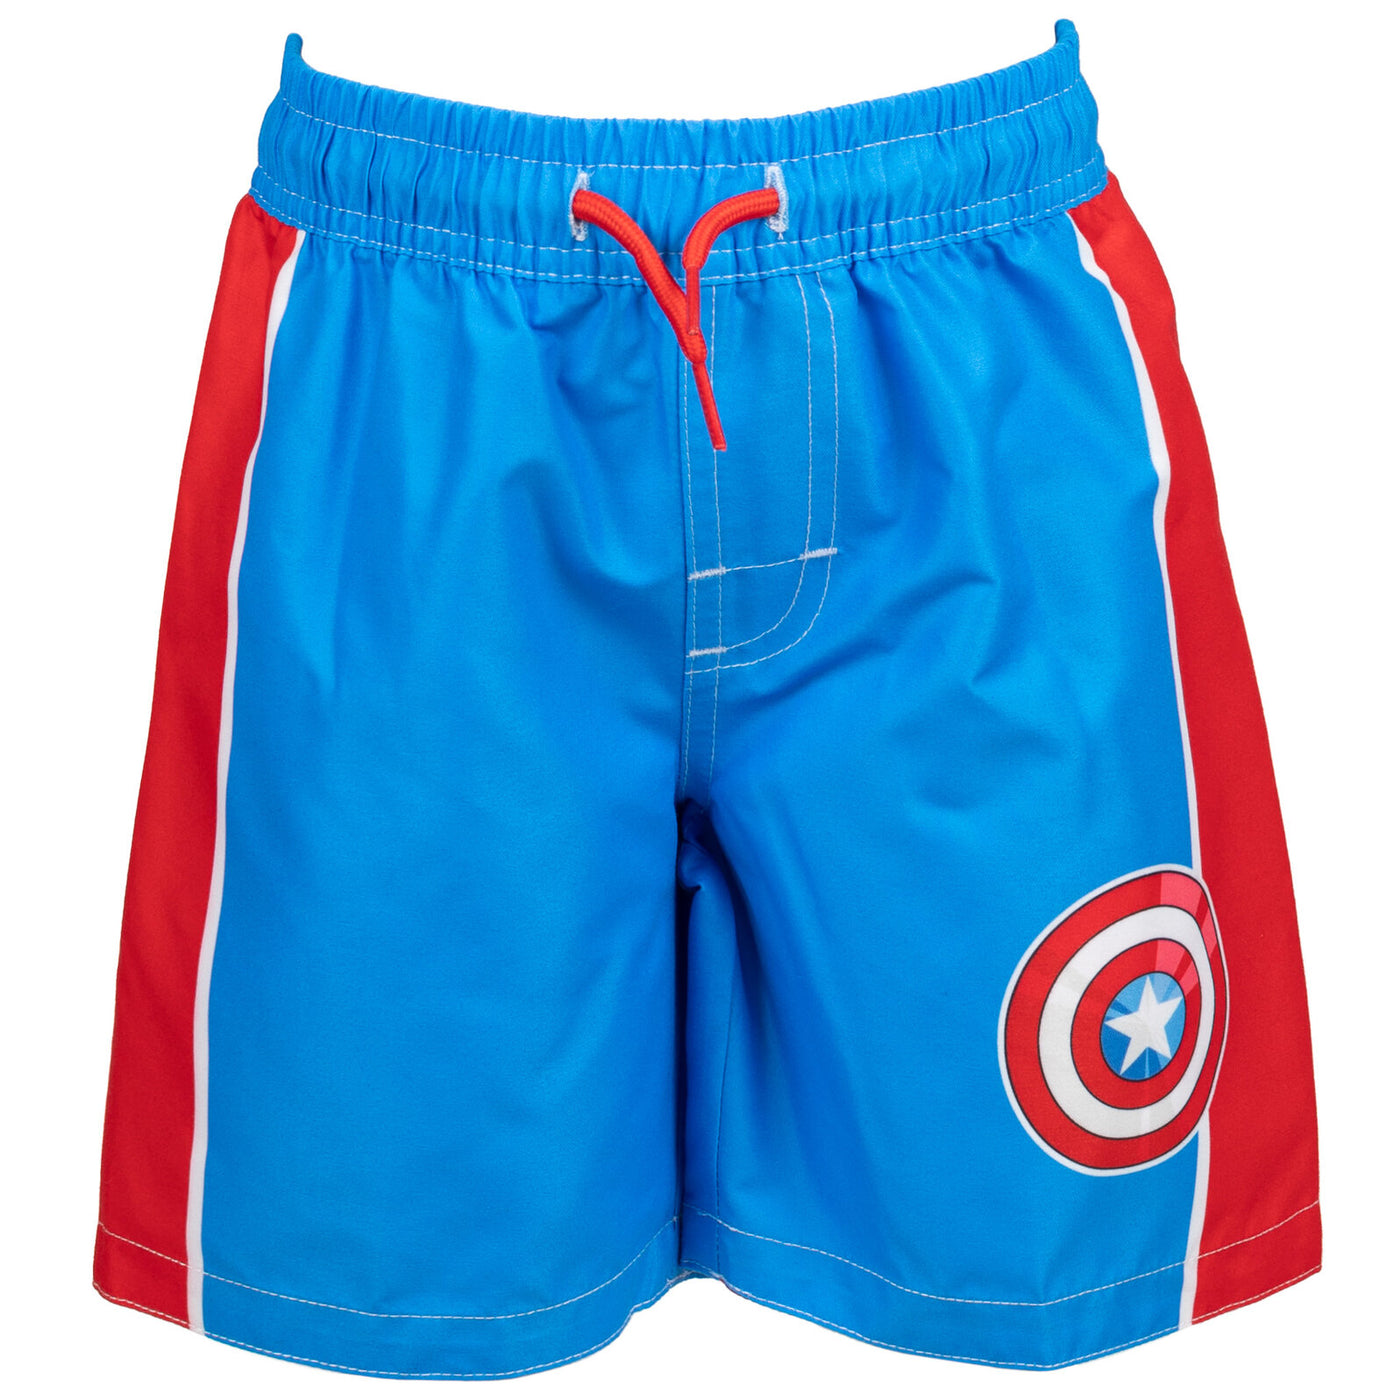 Marvel Avengers Captain America UPF 50+ Rash Guard Swim Trunks Outfit Set